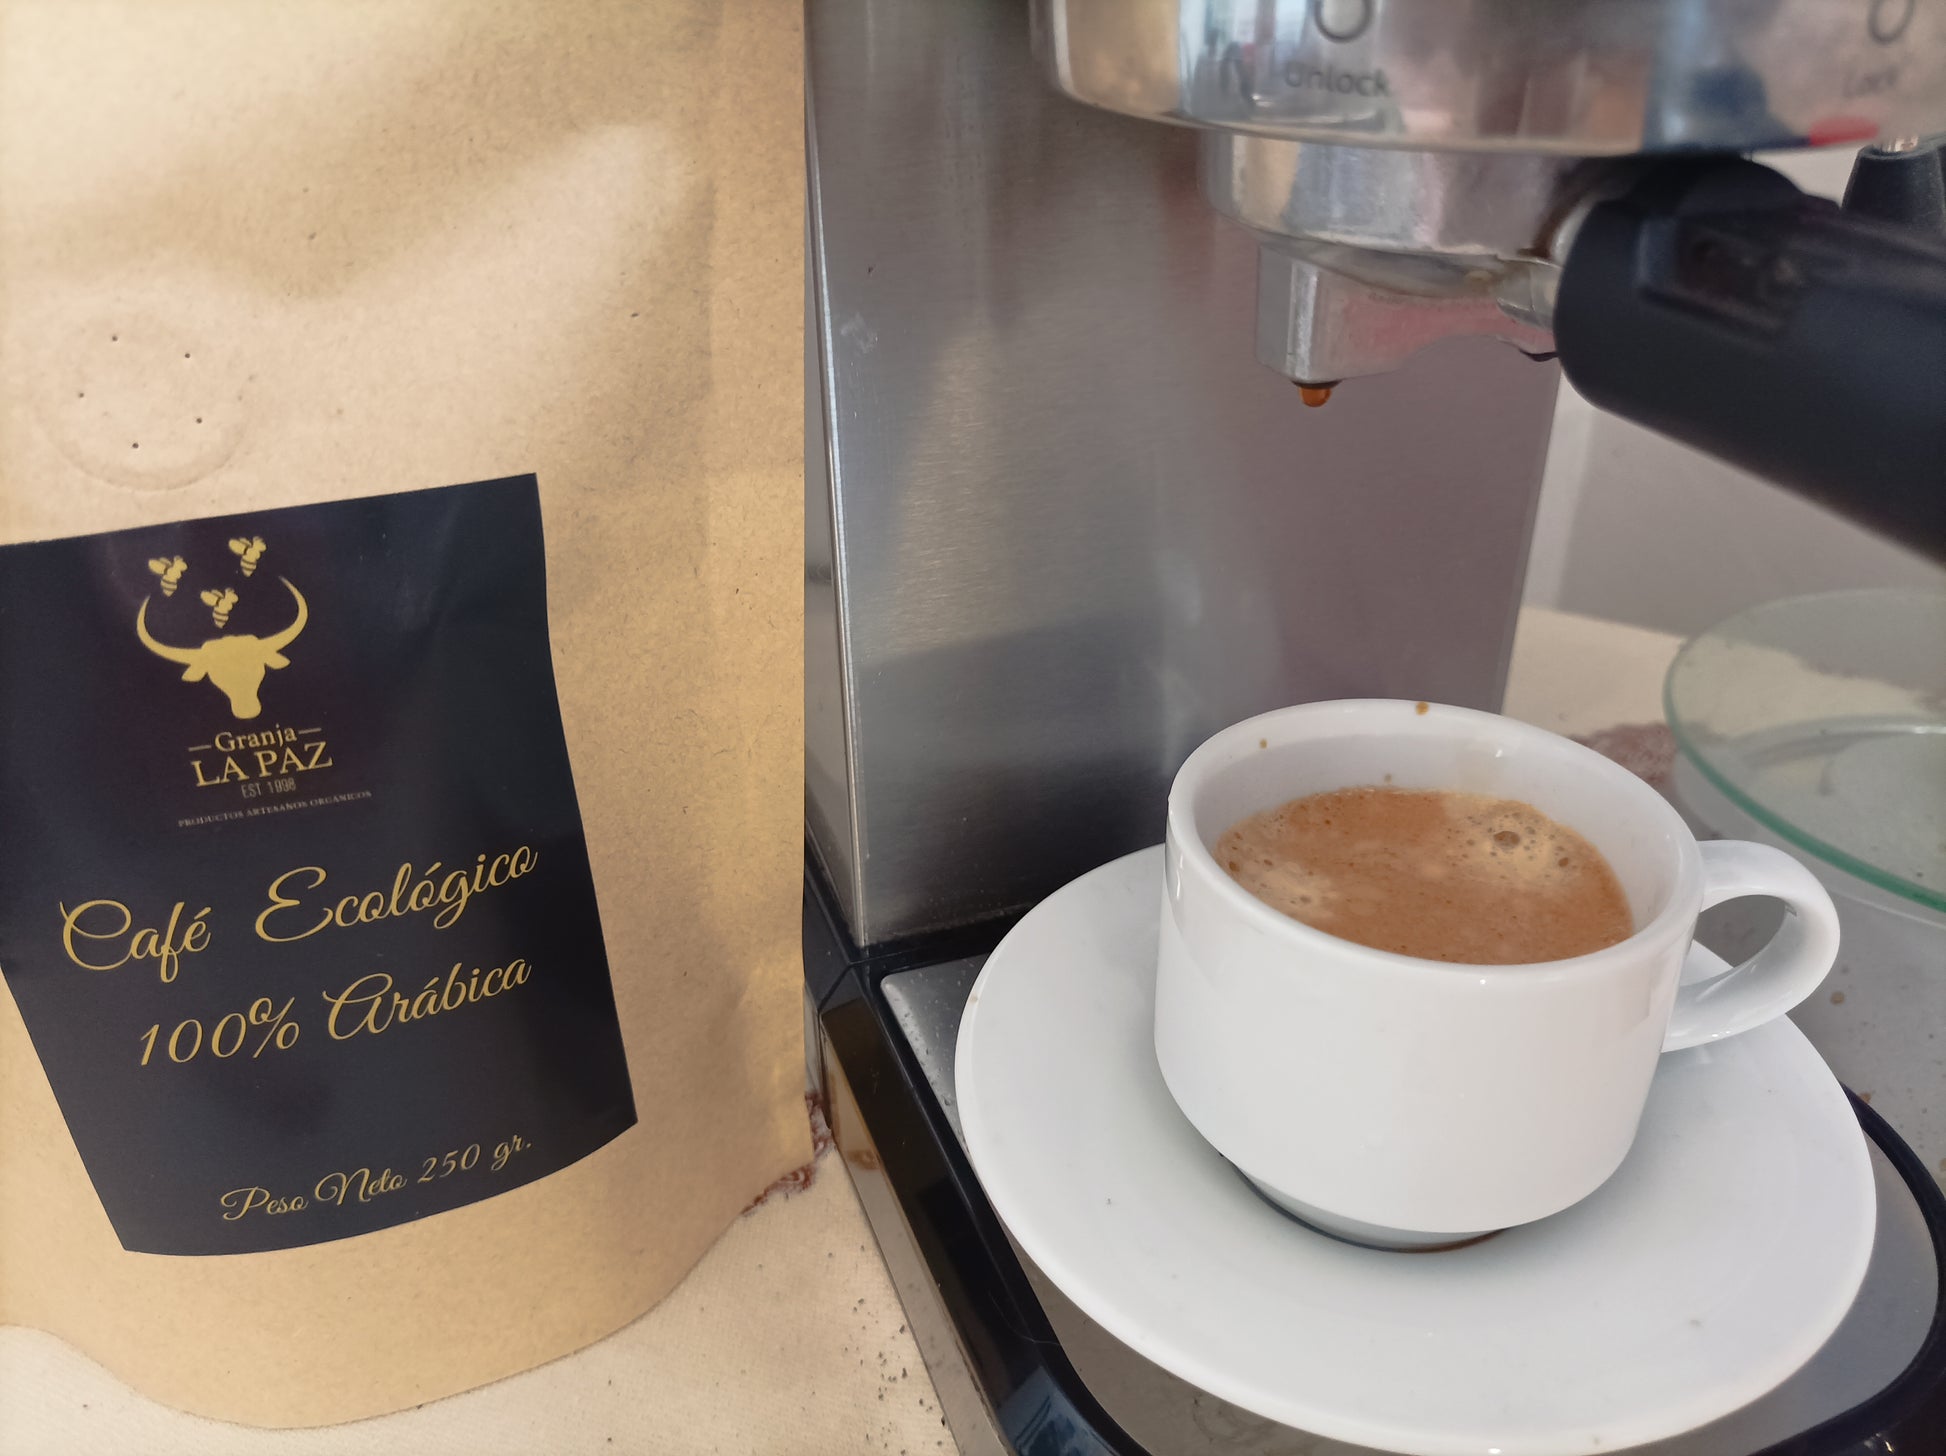 café ecológico certificado Granja La Paz molido 100% bio eco cafe